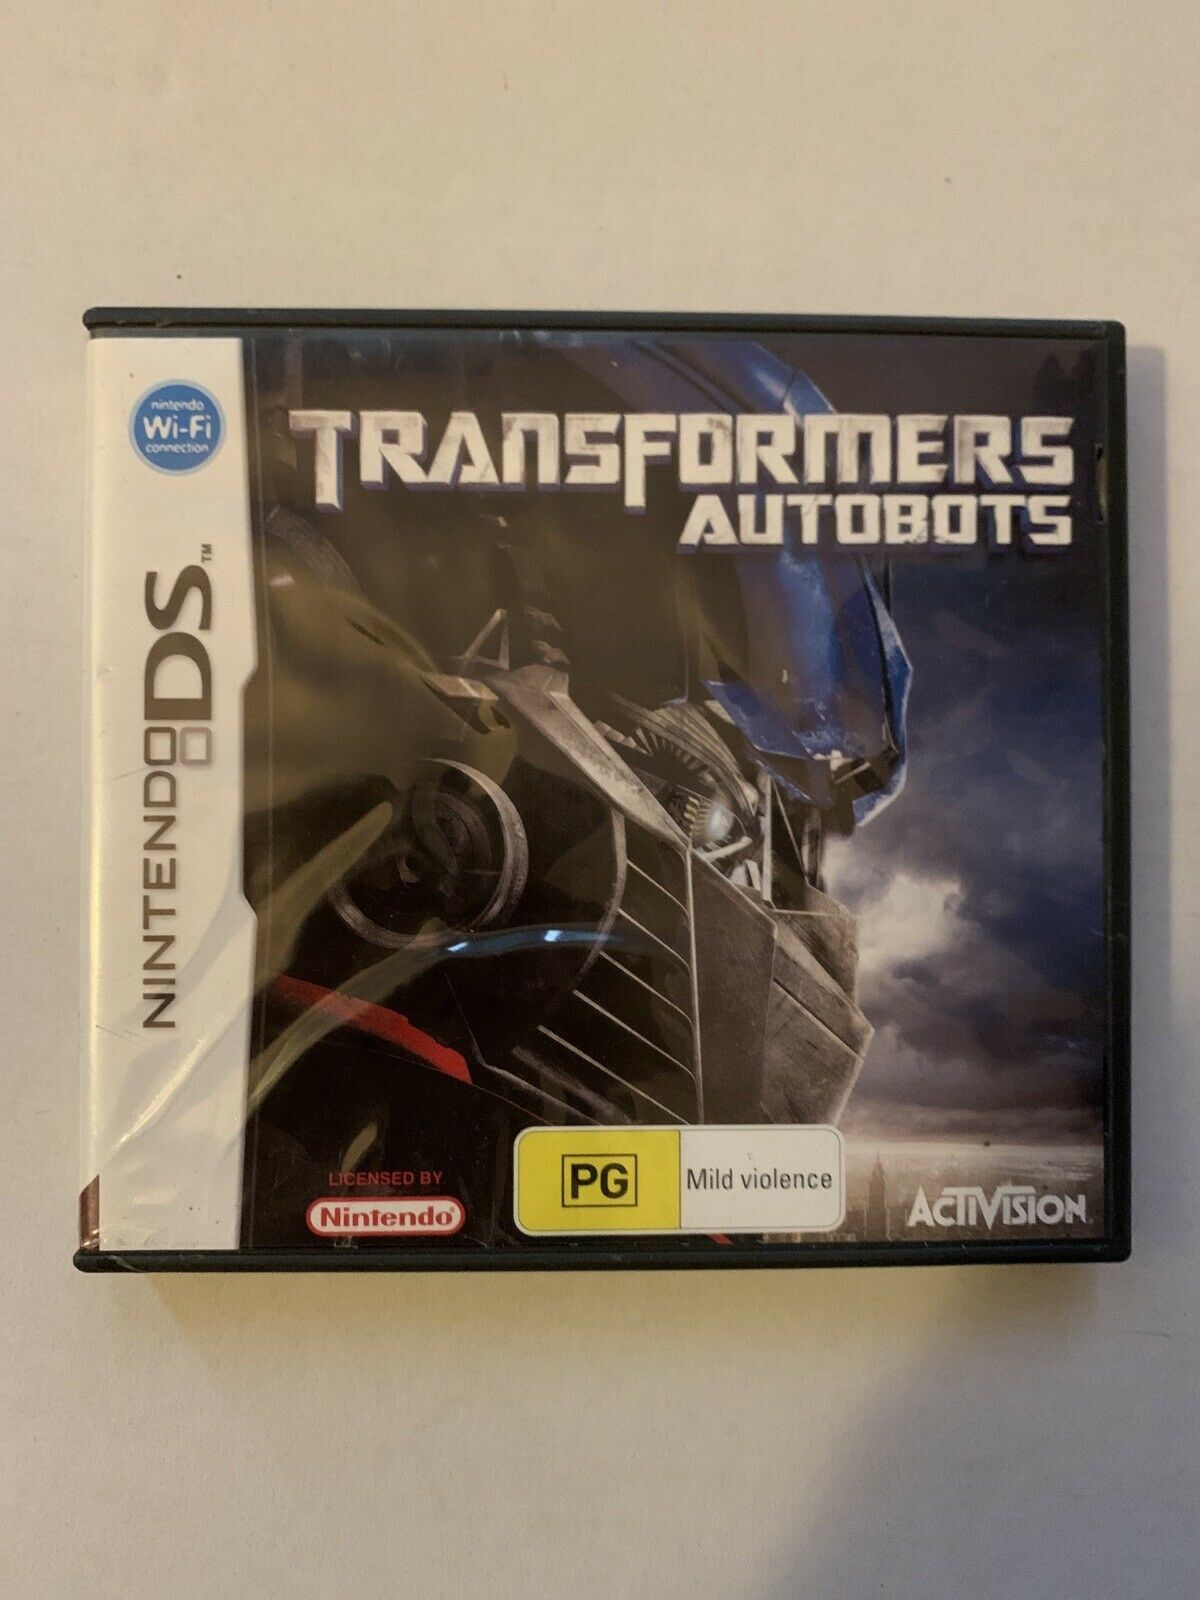 Transformers AutoBots - Nintendo DS